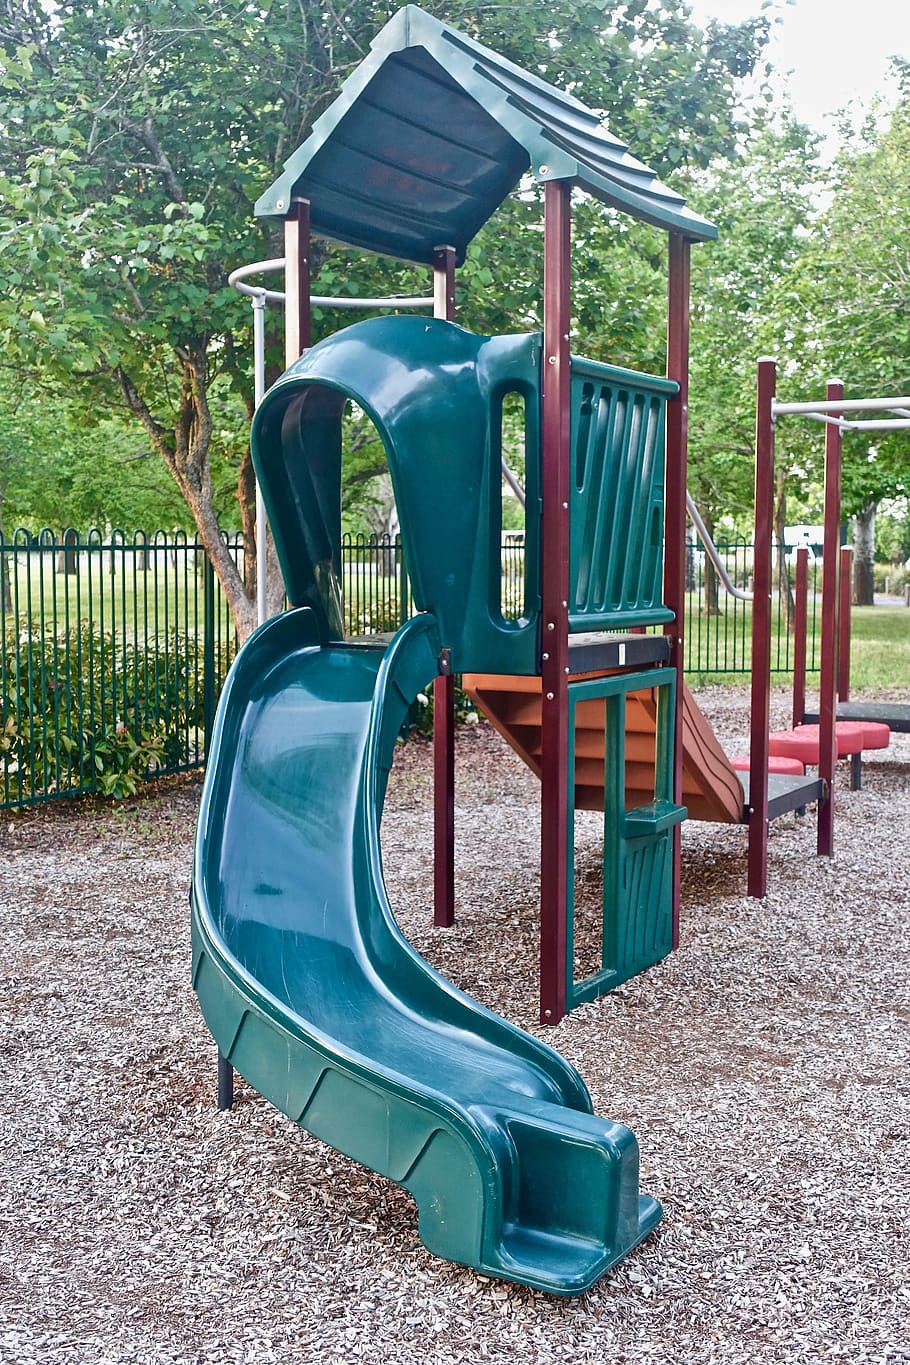 slide, playground, kids, equipment, climbing, frame, outdoor play equipment, park, park - man made space, day